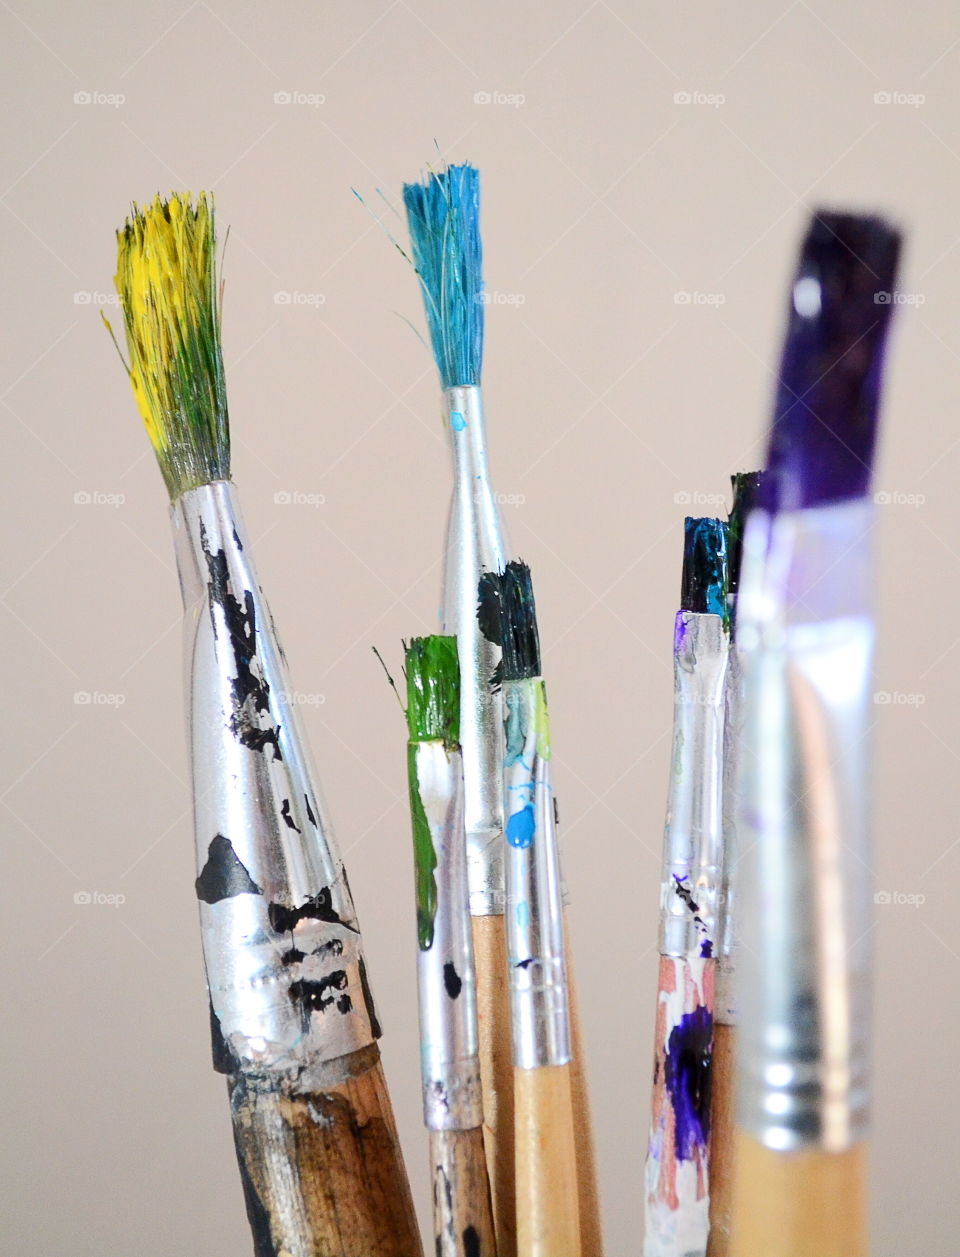 Paintbrushes against grey backgrounds